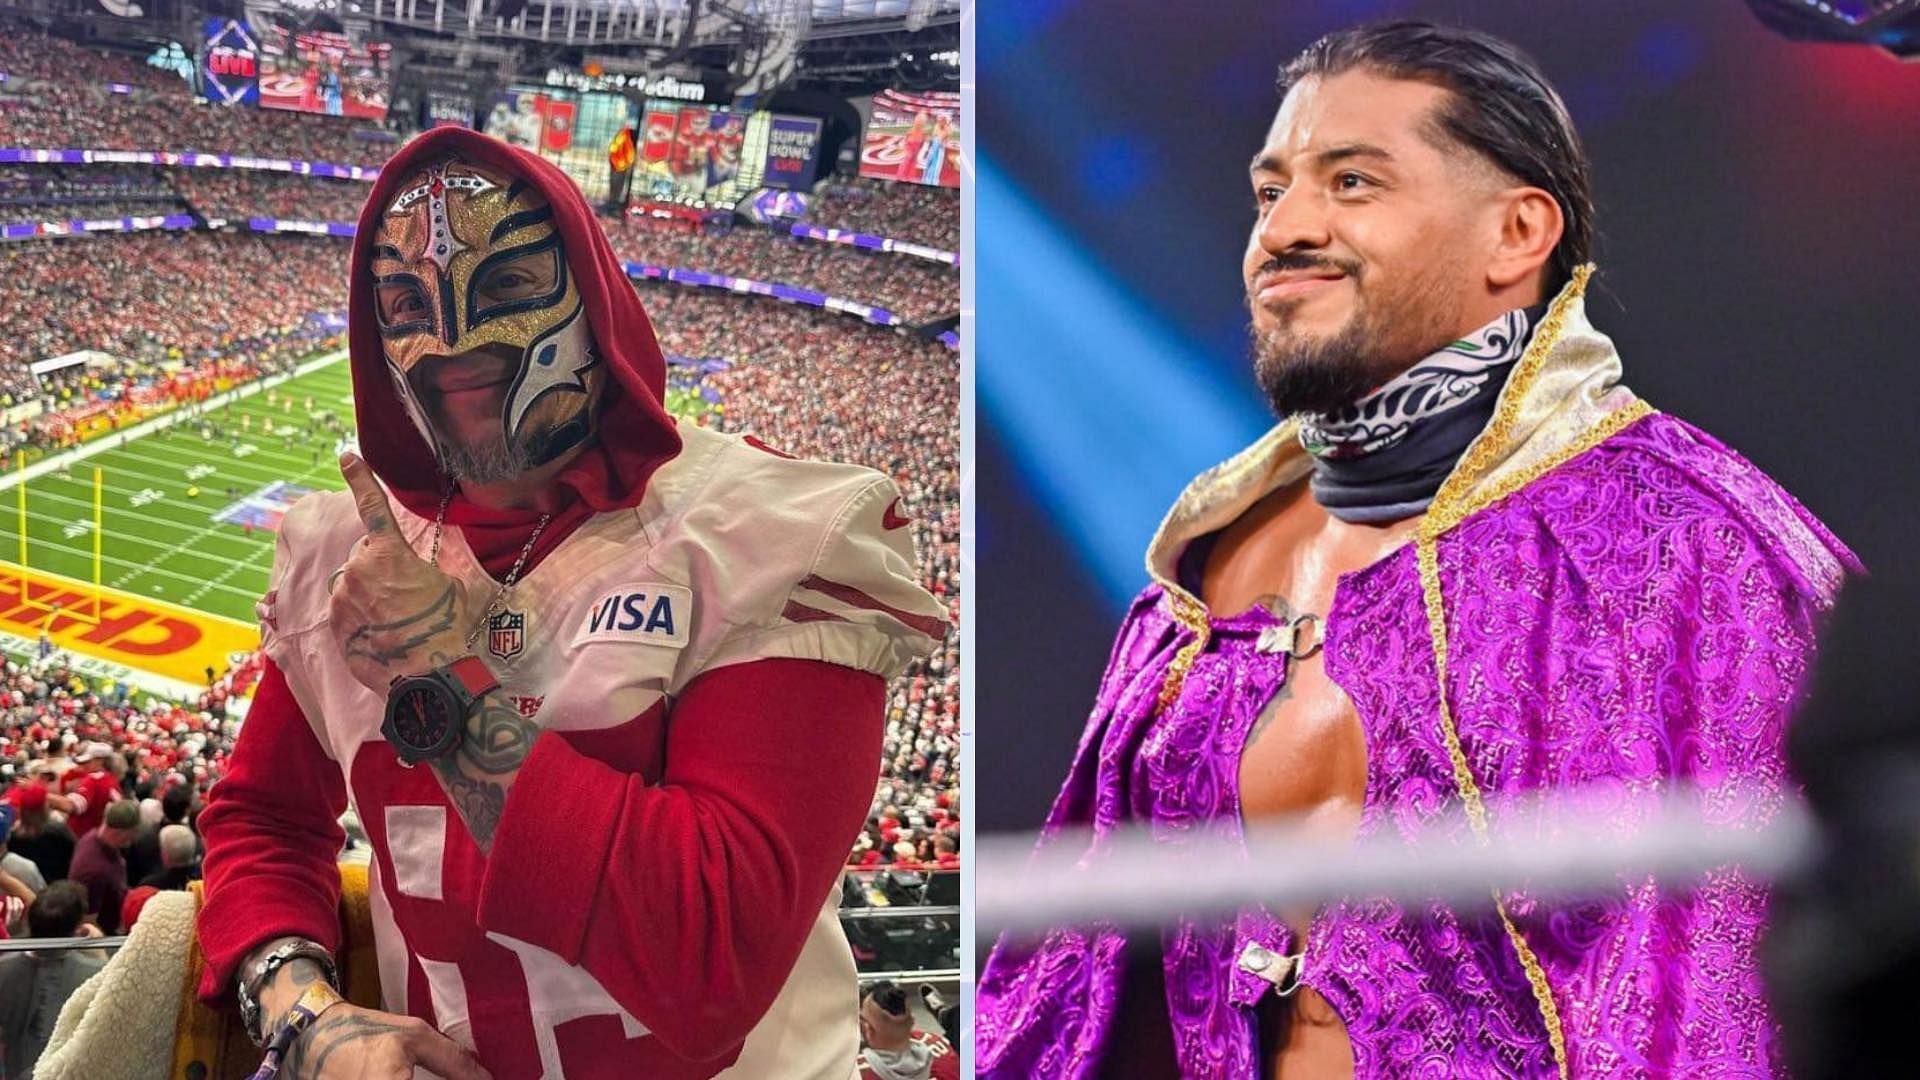 Rey Mysterio and Santos Escobar will clash on WWE SmackDown